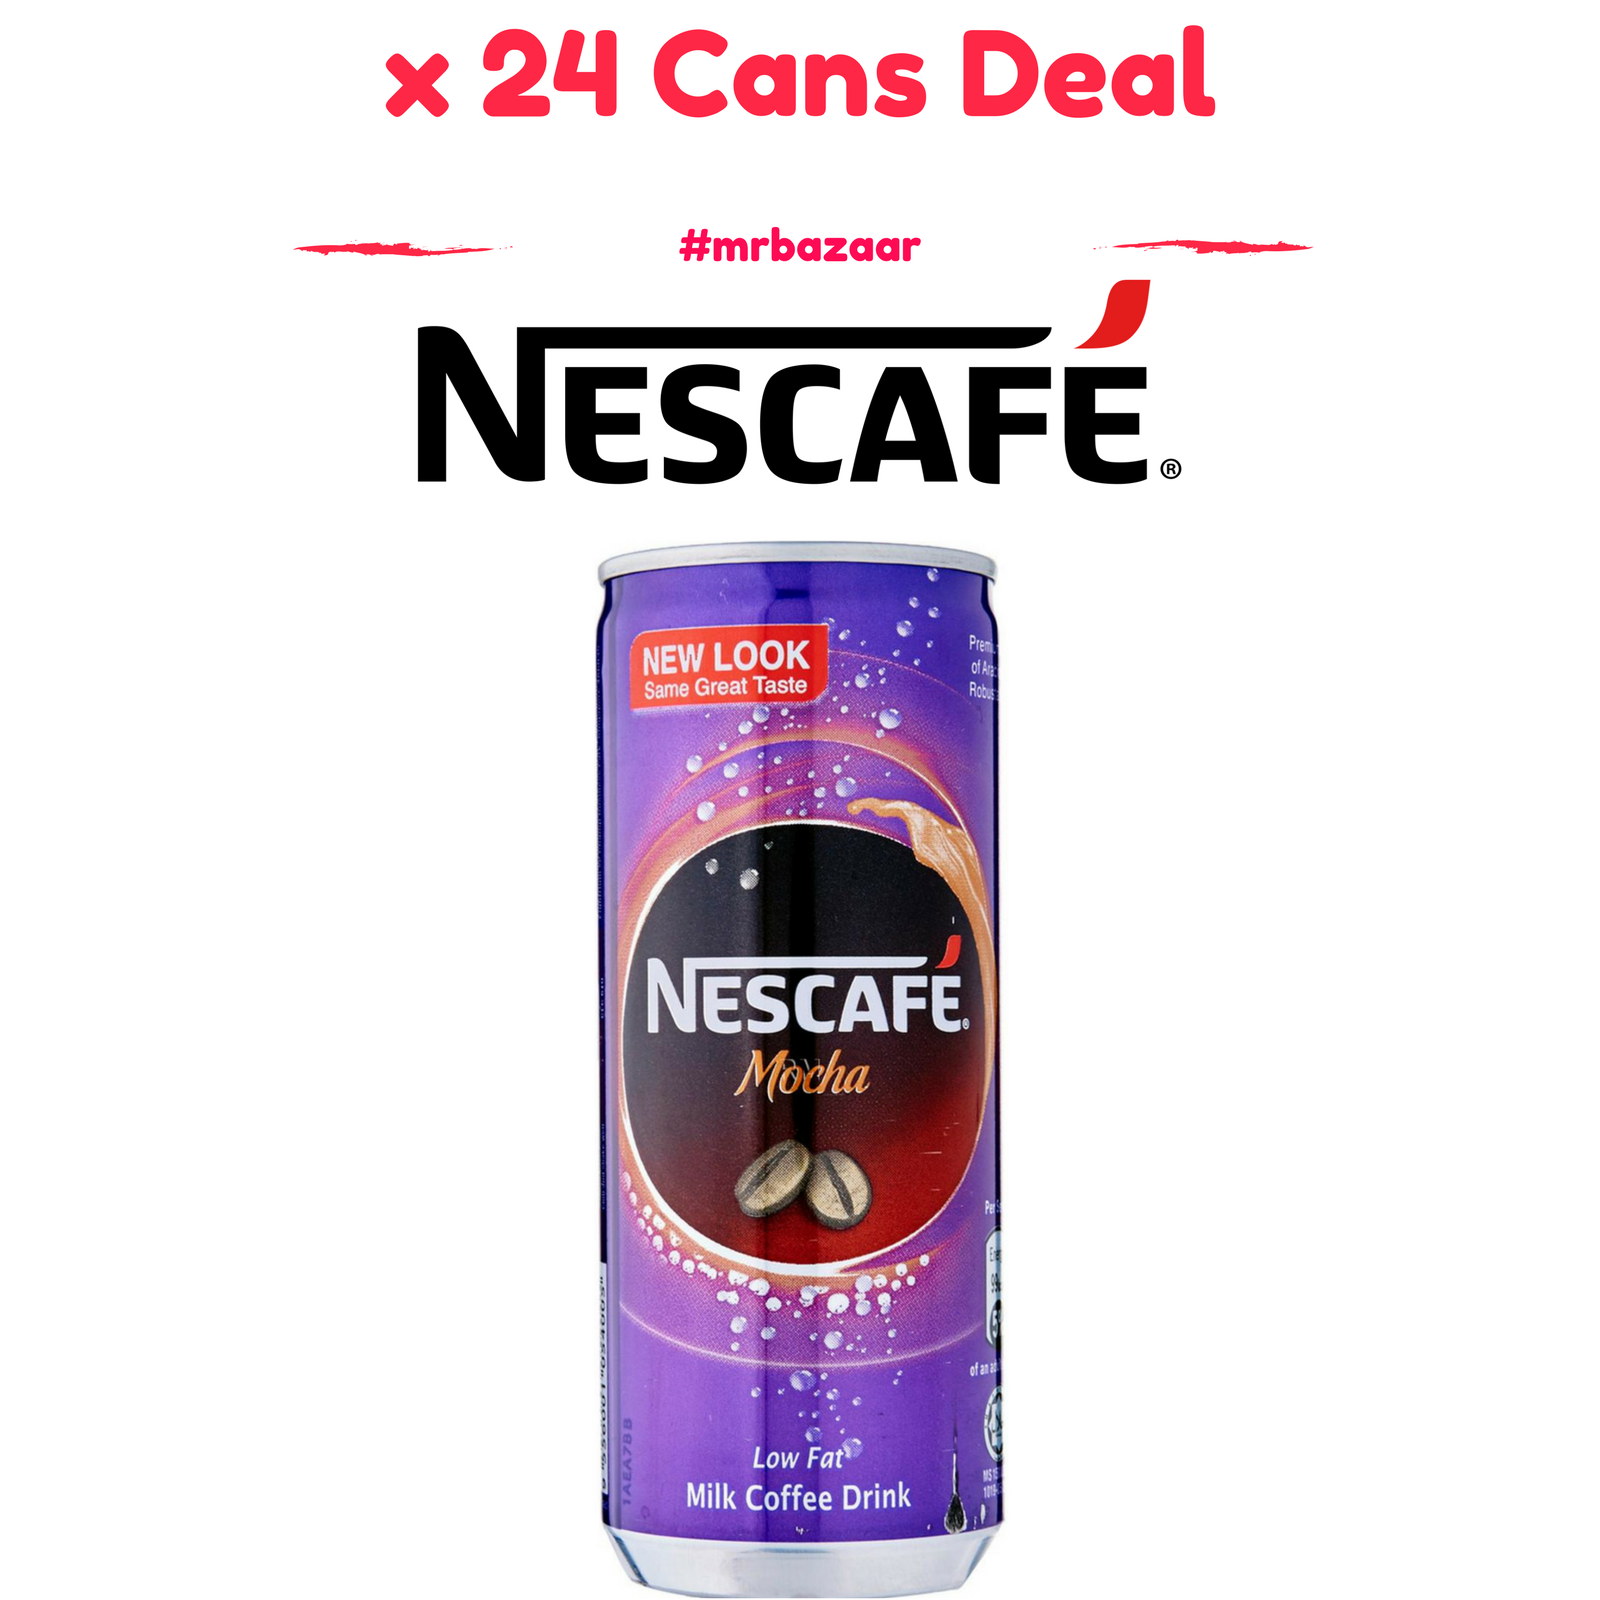 Nescafe Mocha Can x 24 cans Deal (240ml) [Nestle]